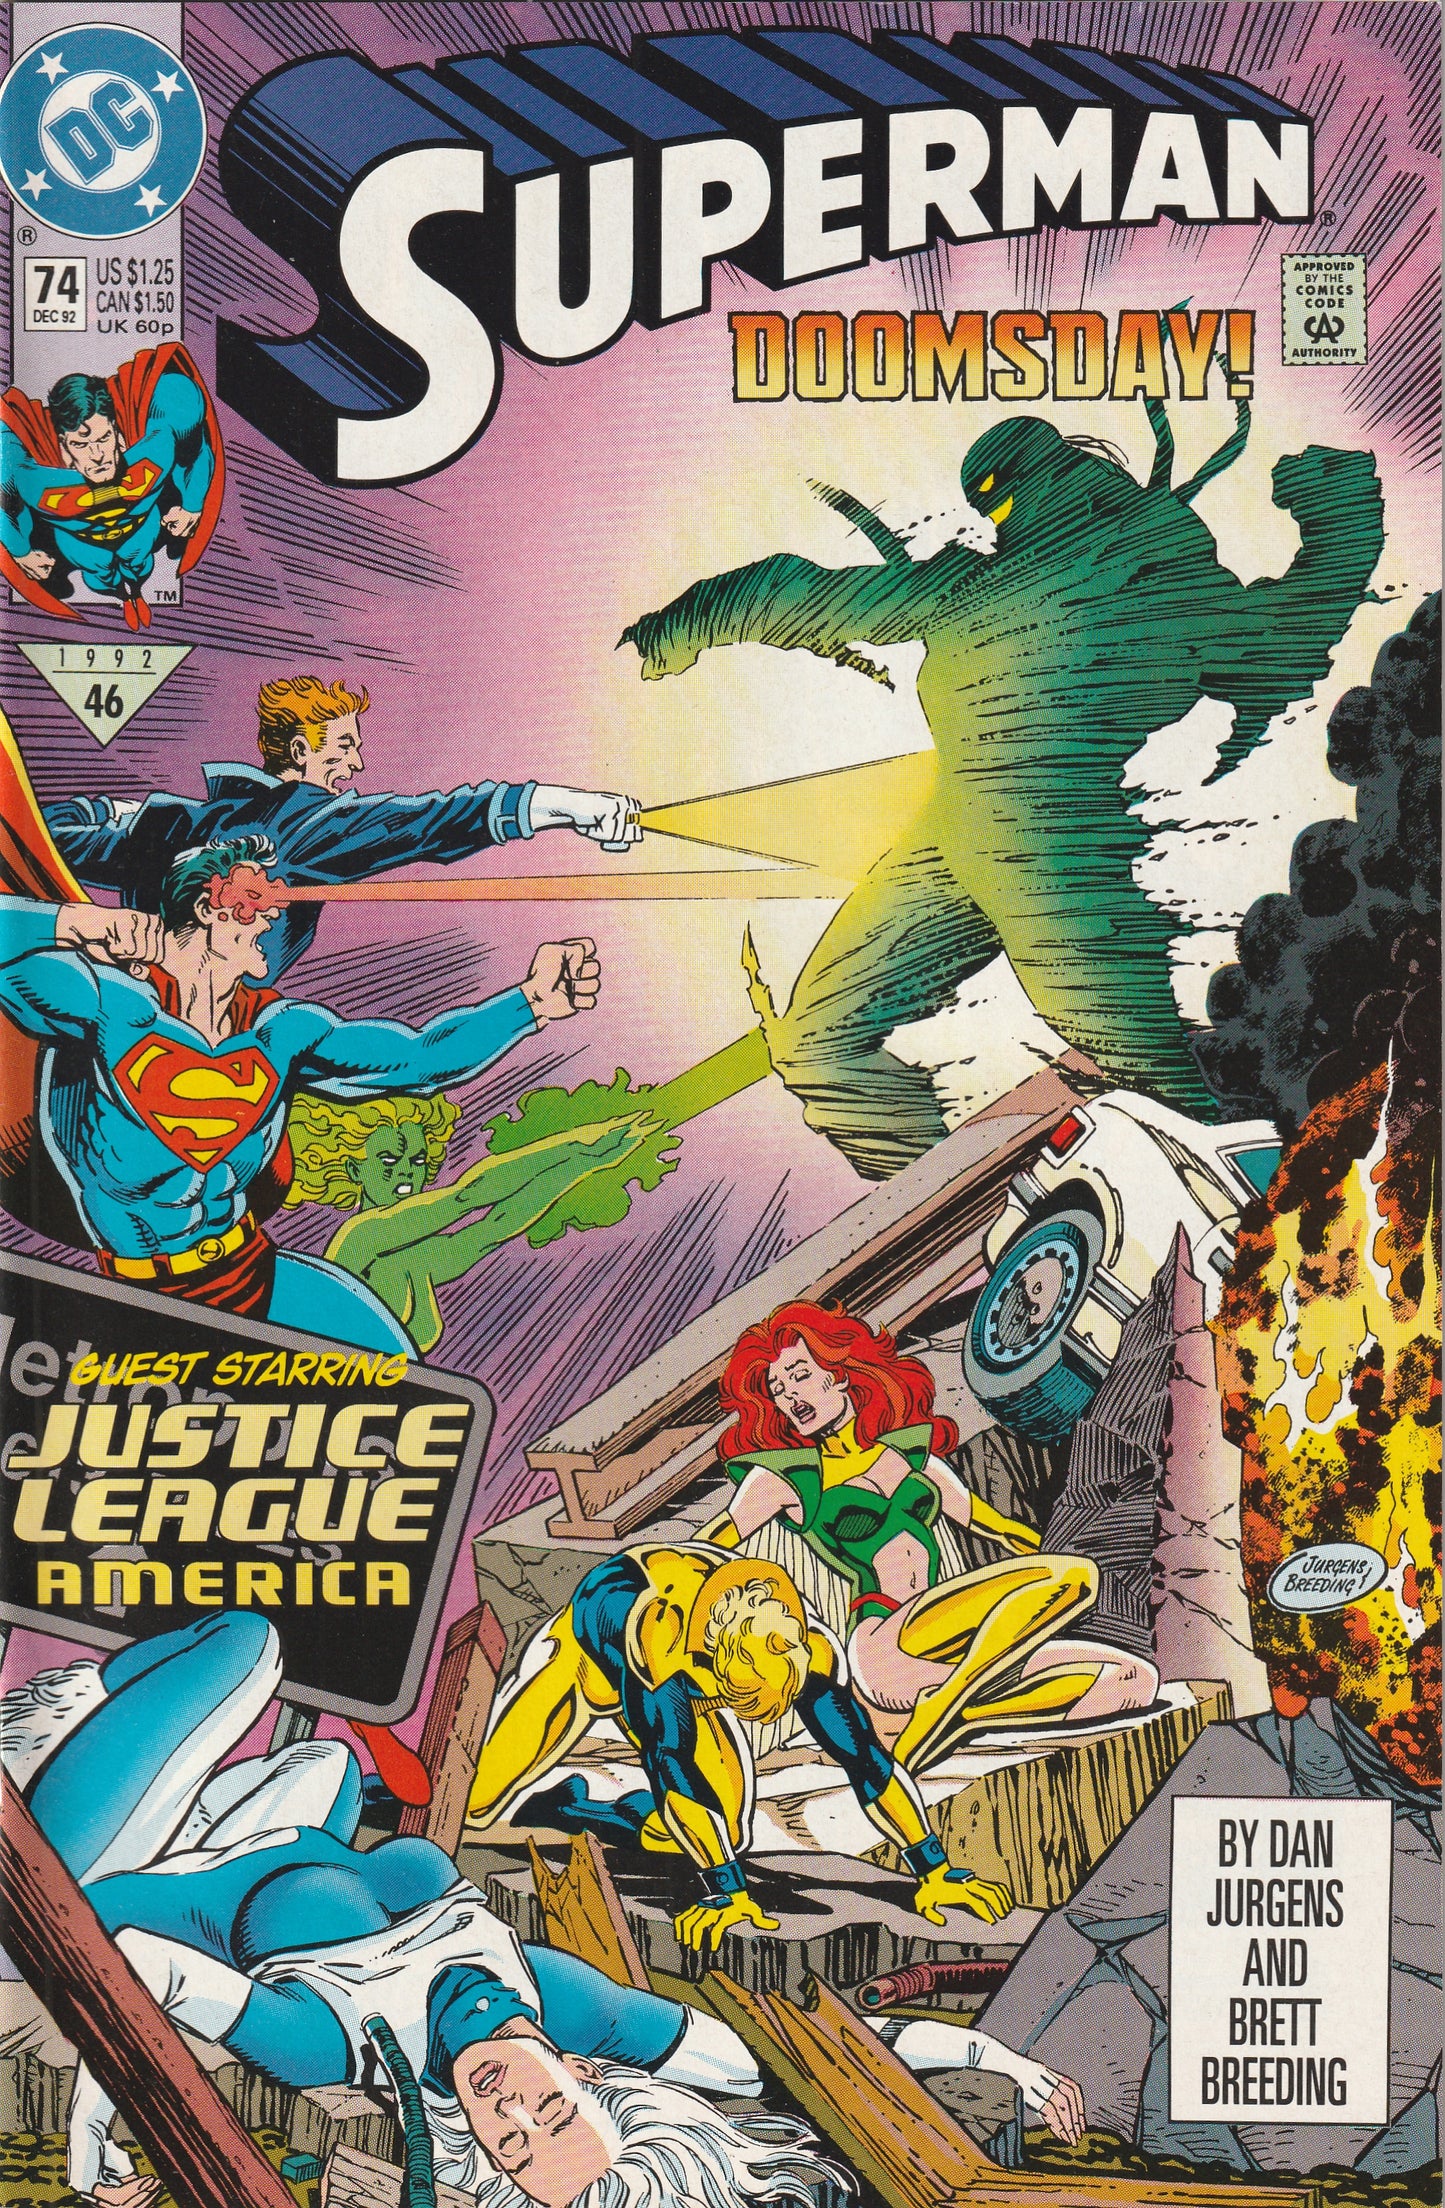 Superman #74 (Vol 2, 1992) - Superman Versus Doomsday